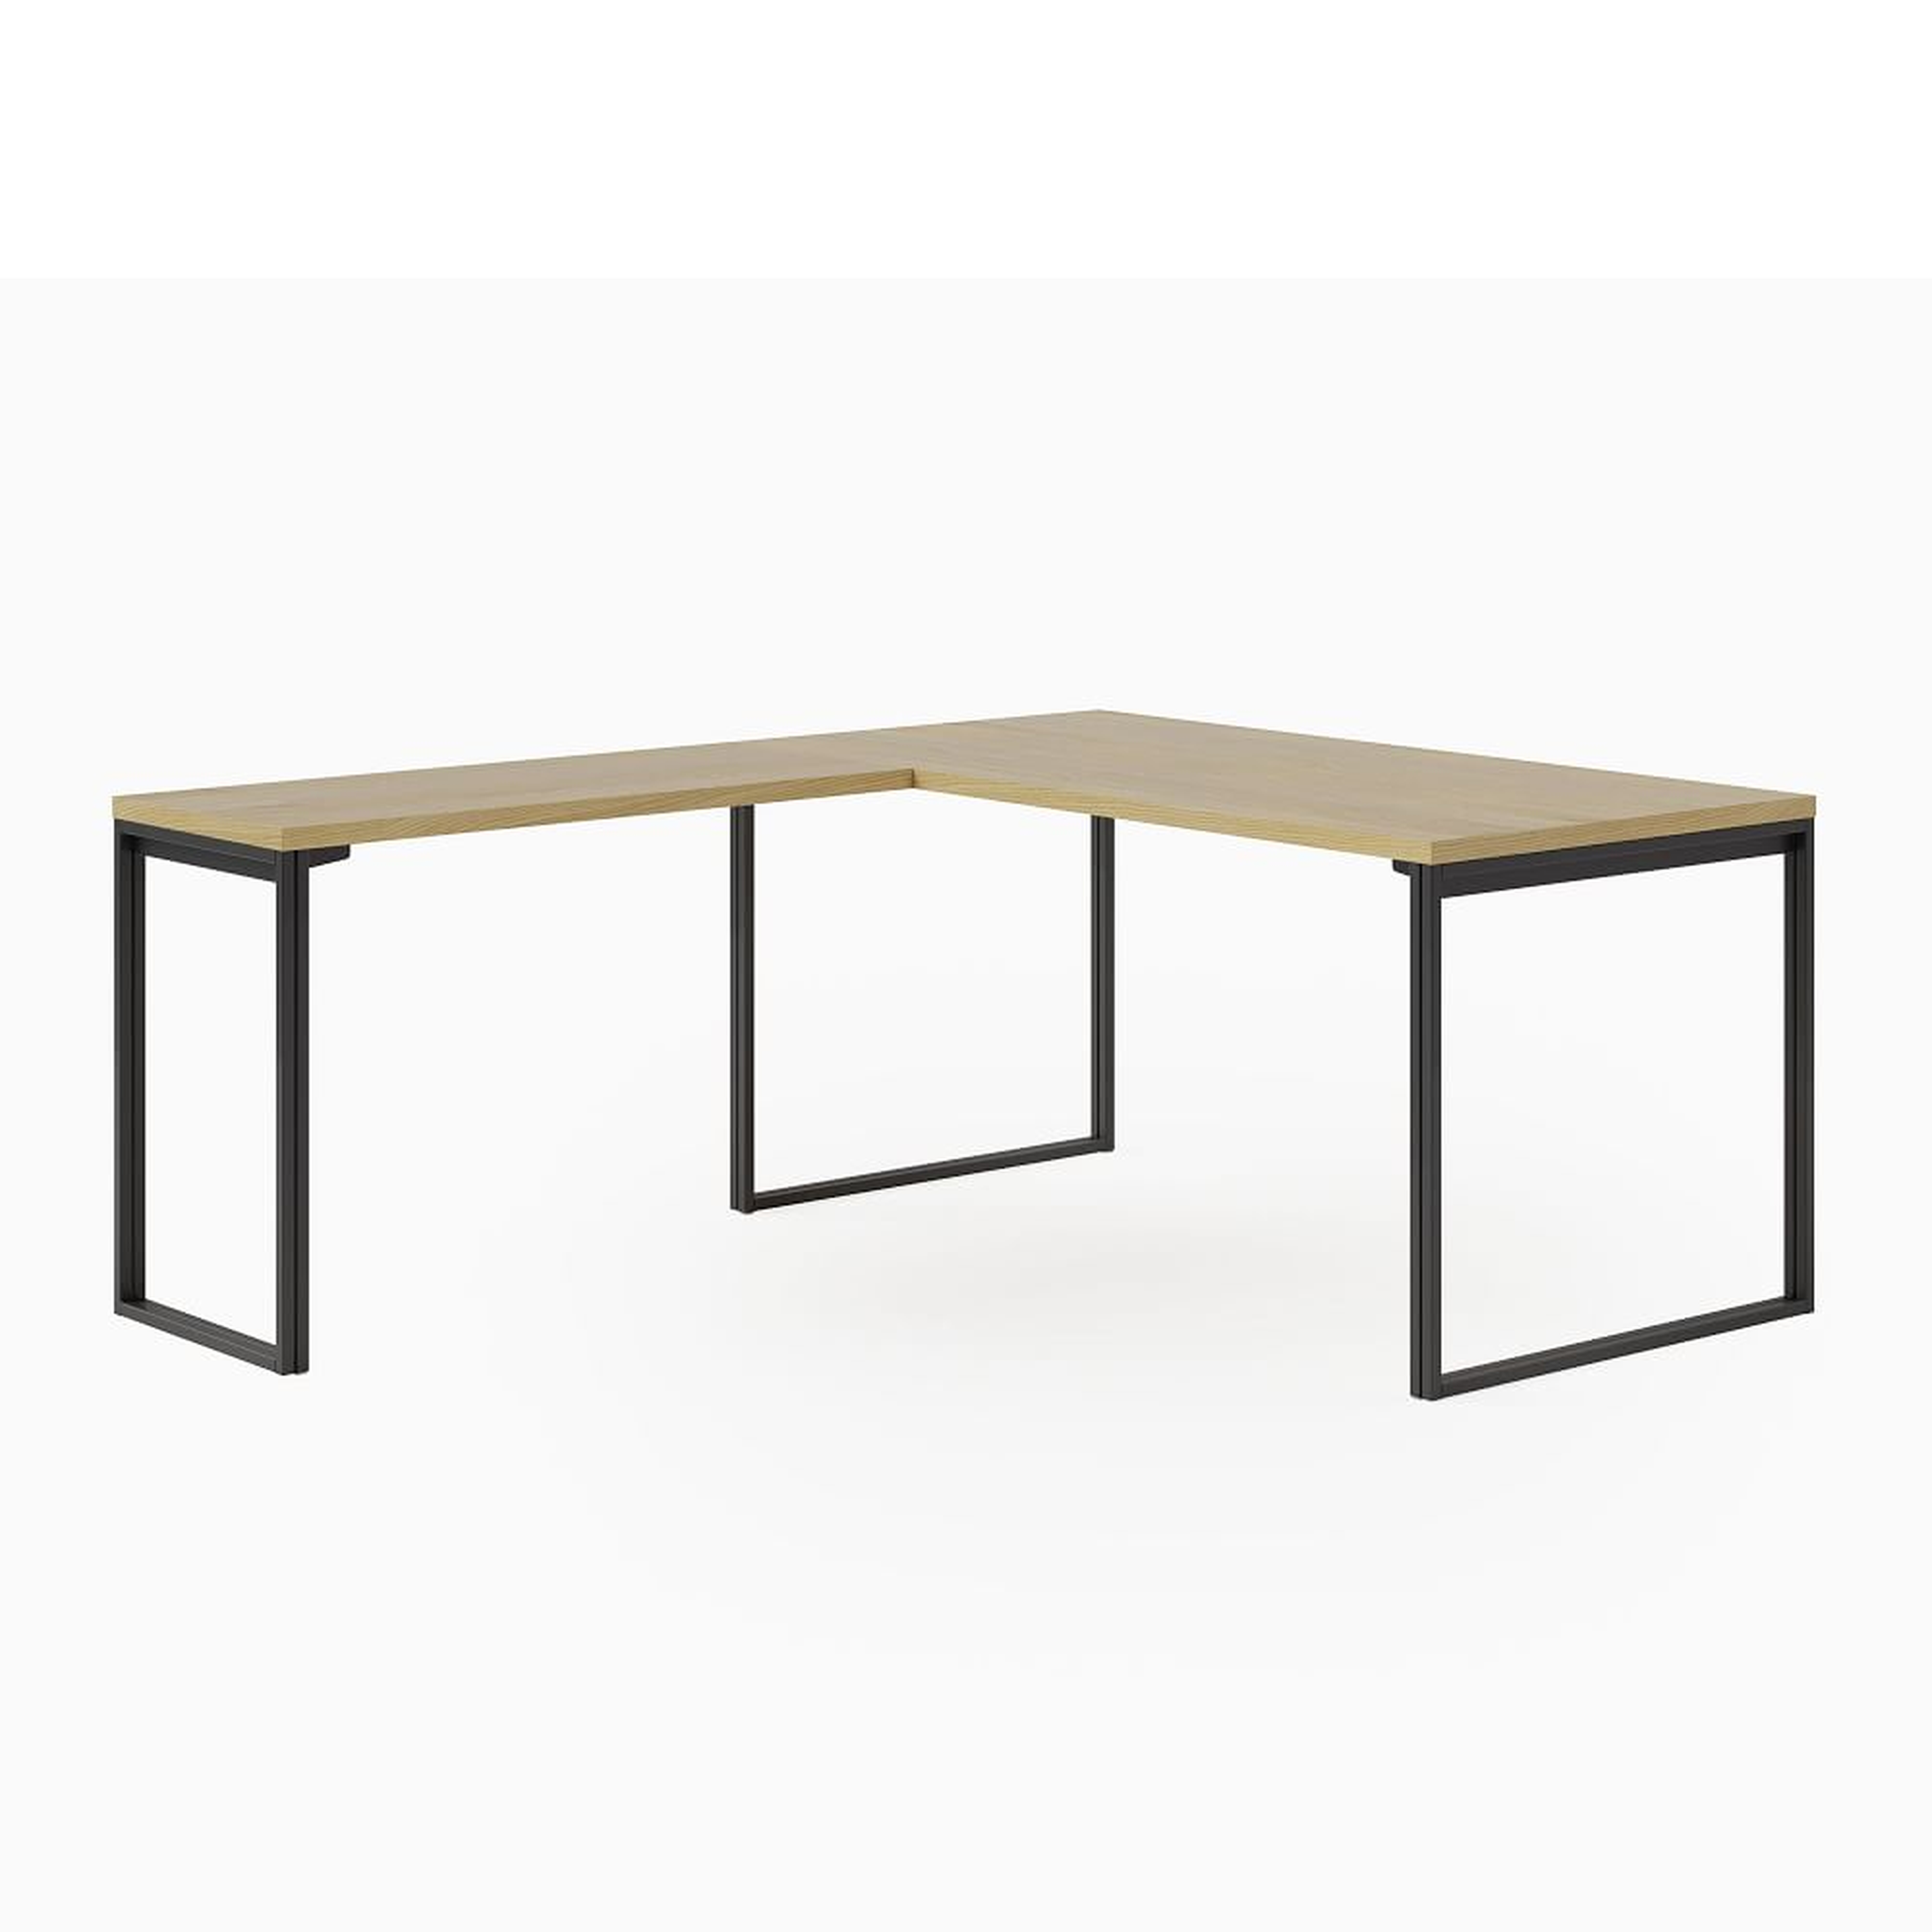 Greenpoint Desk Add-On Return (Desk Sold Separately), 18"x42", Dark Bronze, Natural Oak Veneer - West Elm